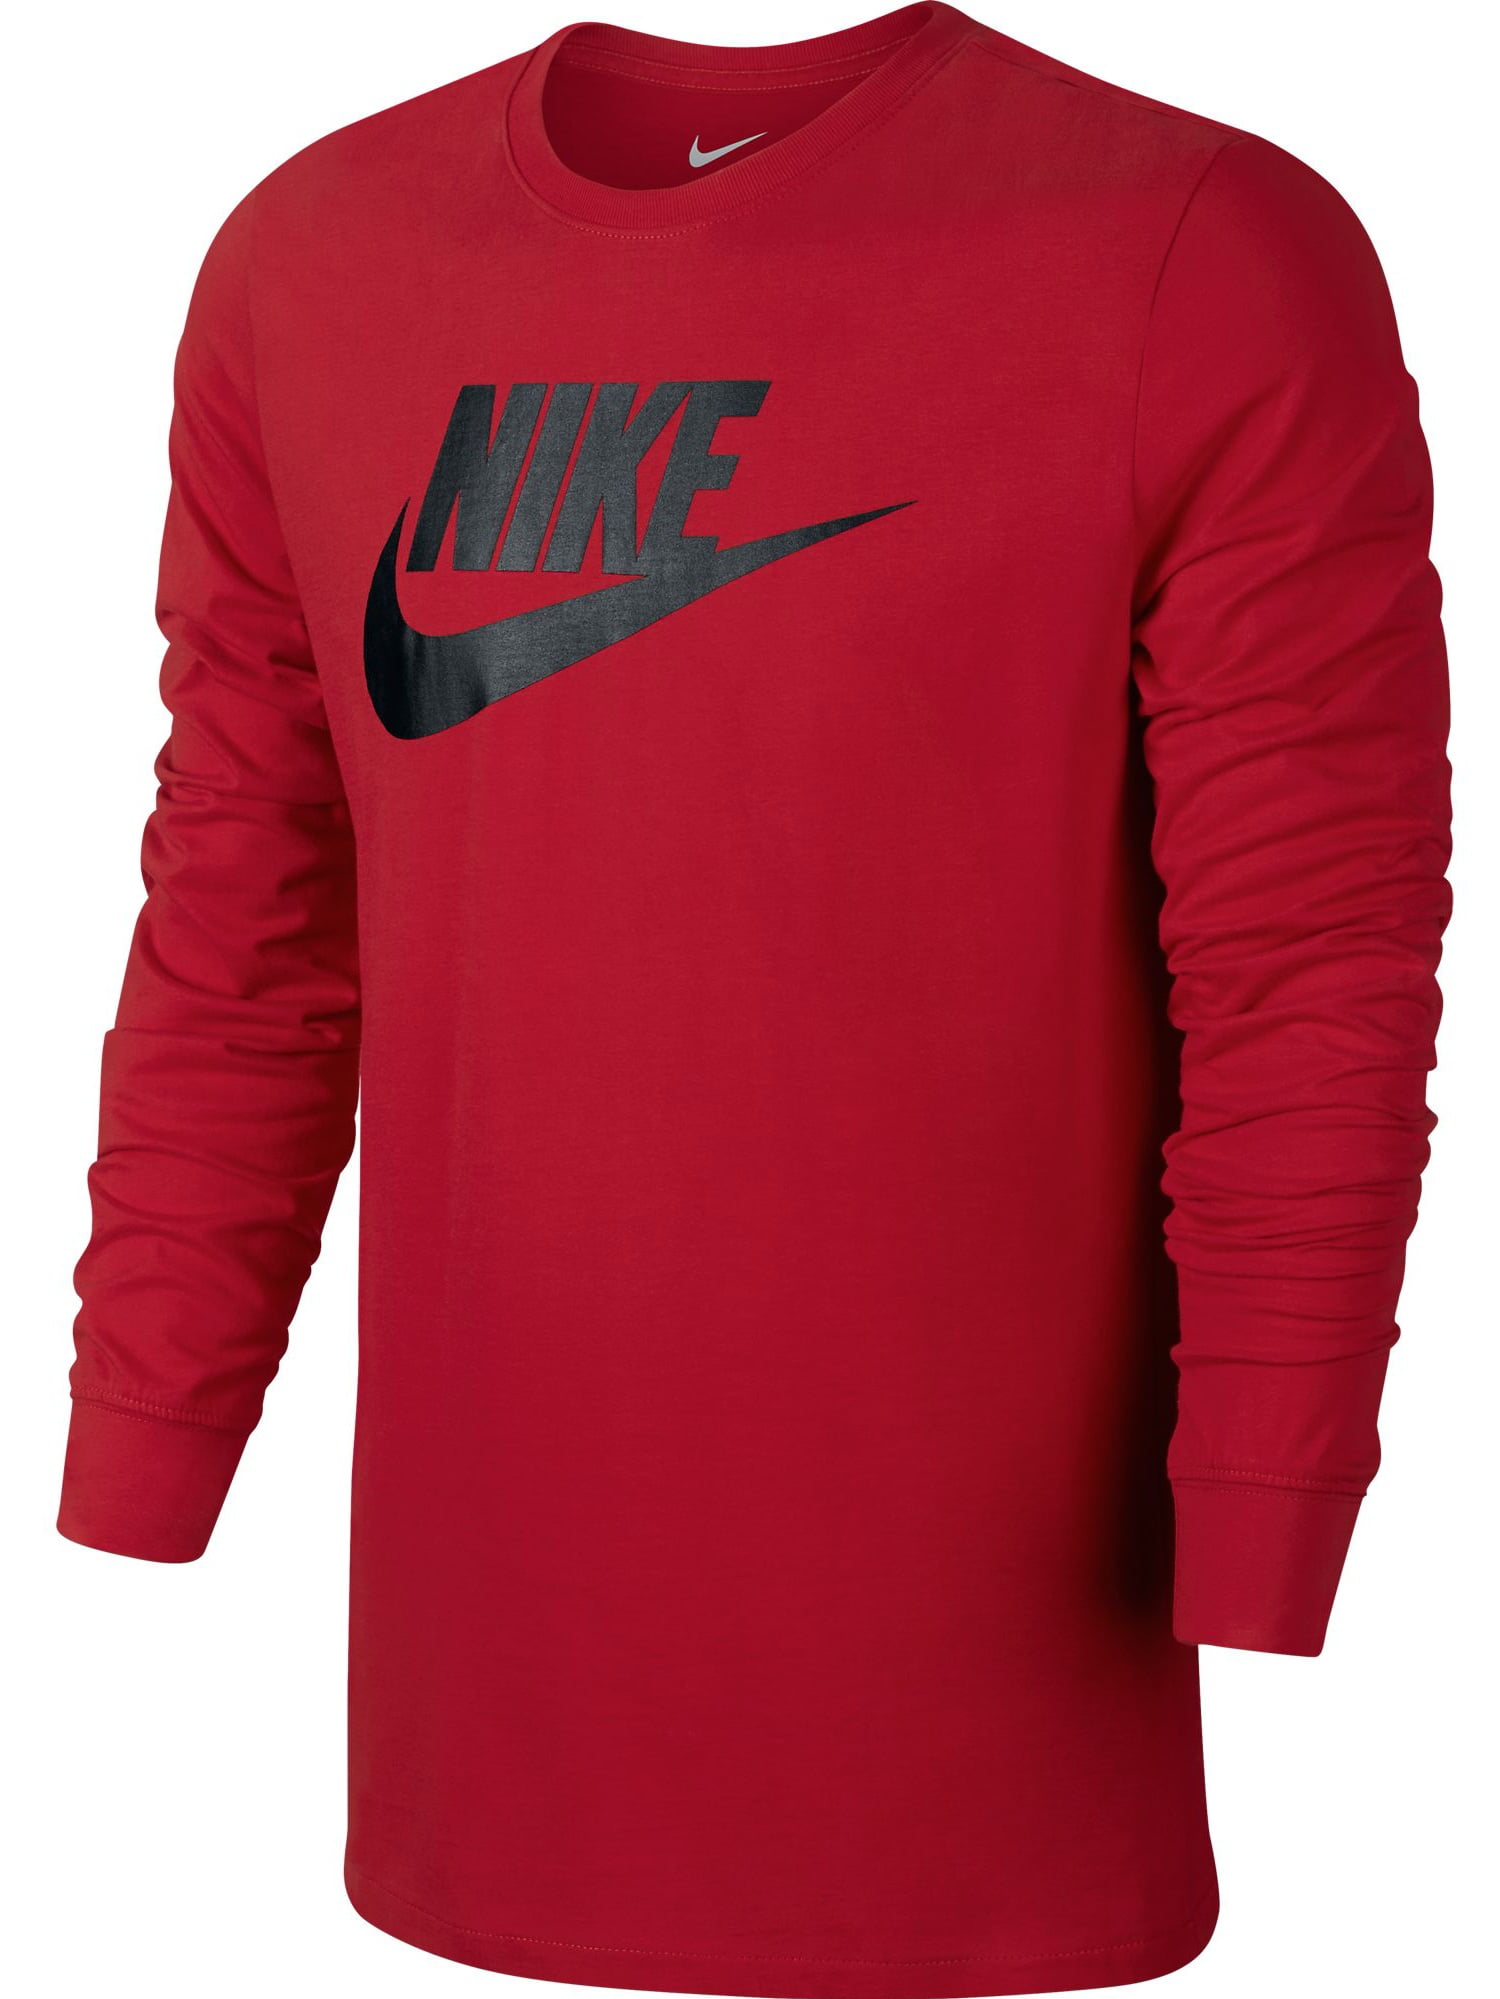 Nike - Nike Futura Men's T Shirt Red/Black 708466-657 - Walmart.com ...